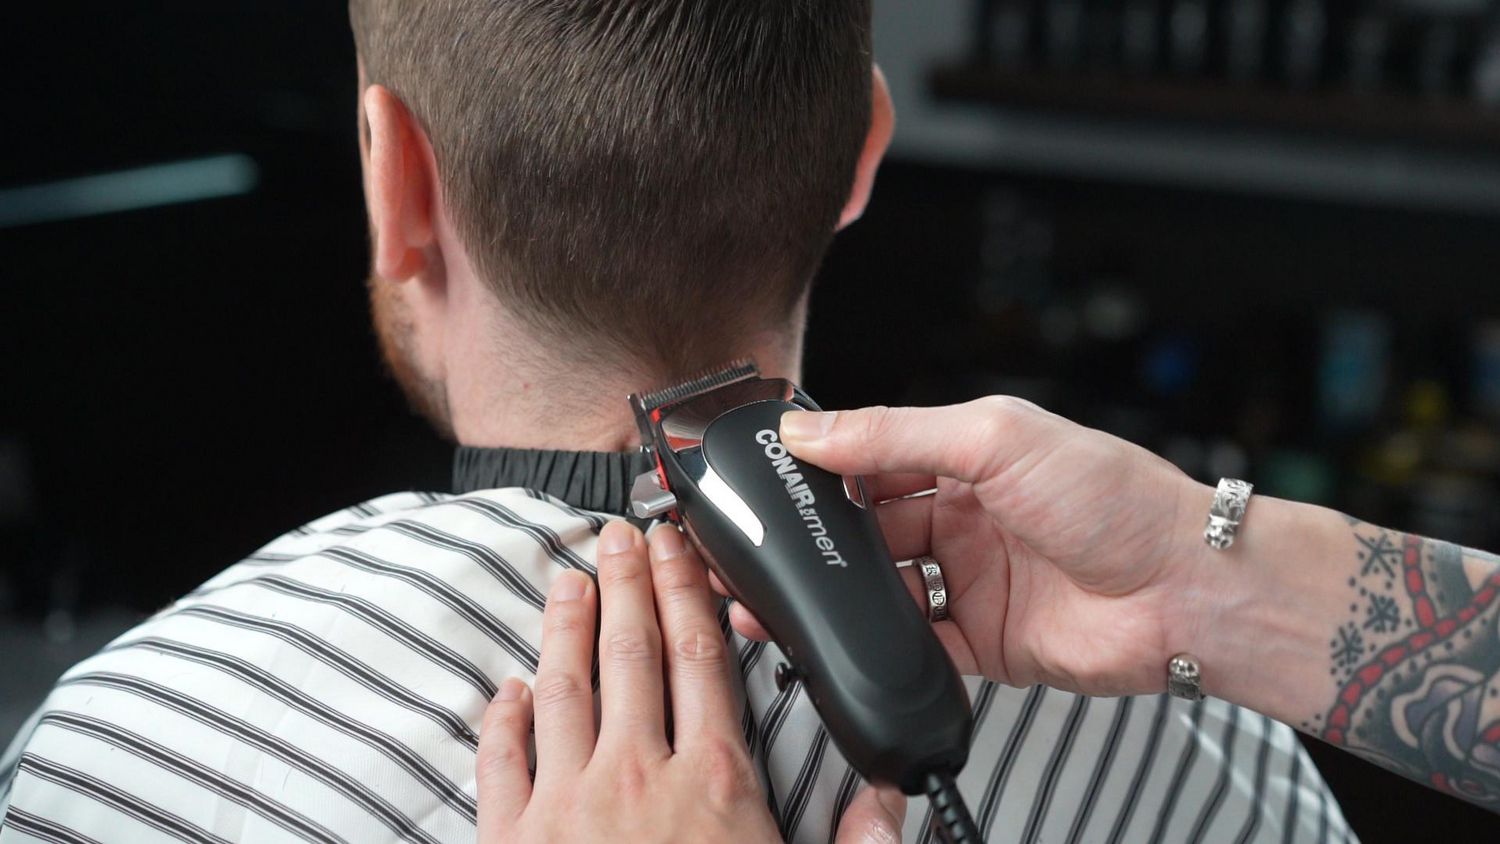 conair the barber shop pro series haircut grooming kit